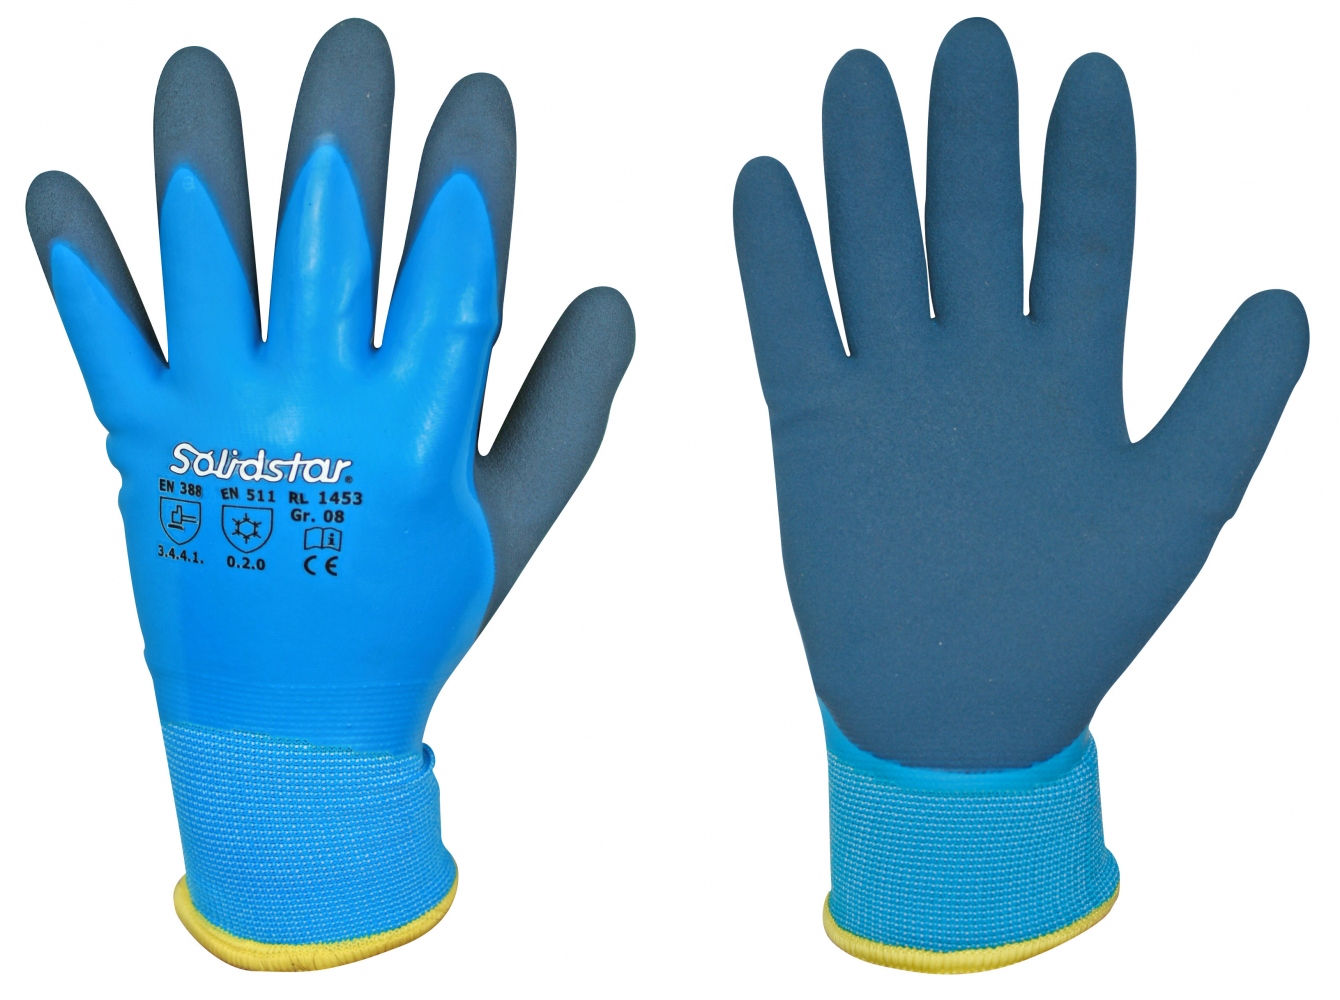 pics/Leipold/Handschuhe/google/solidstar-1453-latex-winter-protective-gloves-en388-en511-2.jpg